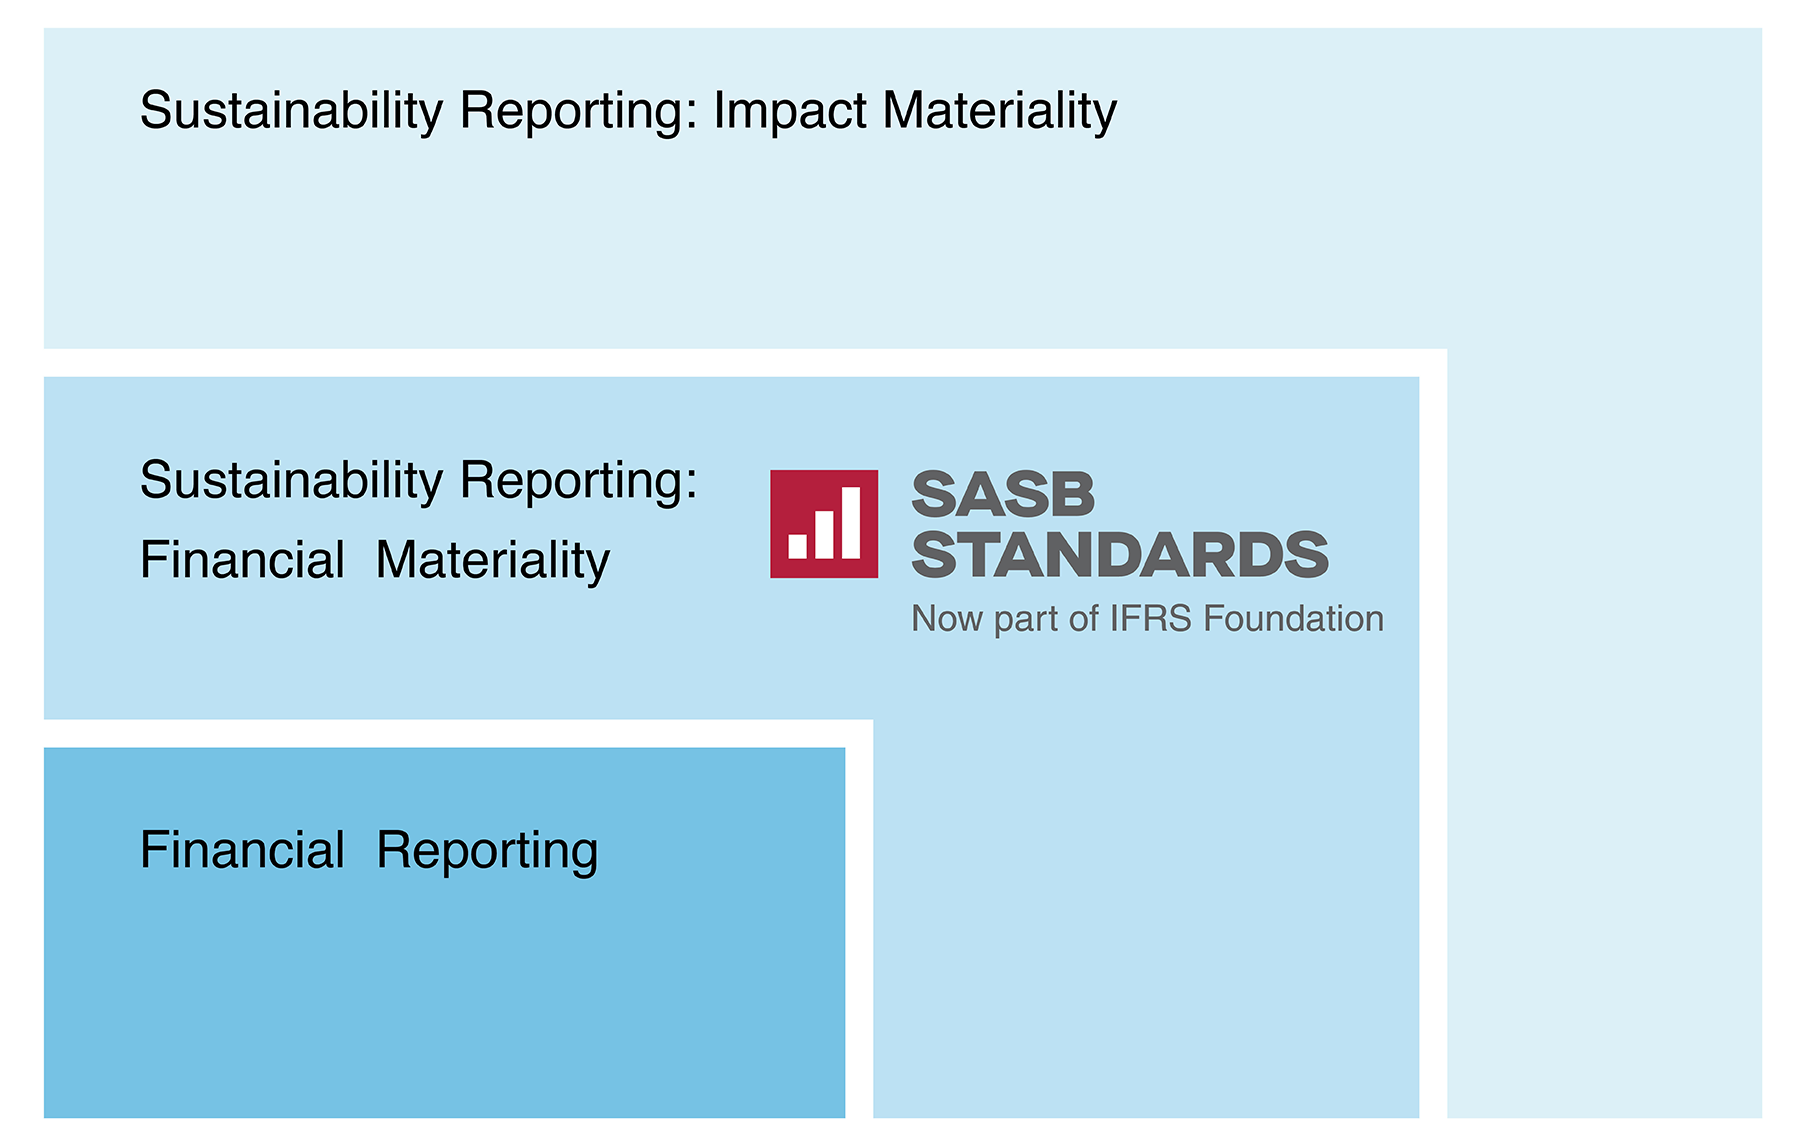 SASB介於財務報告與環境報告之間